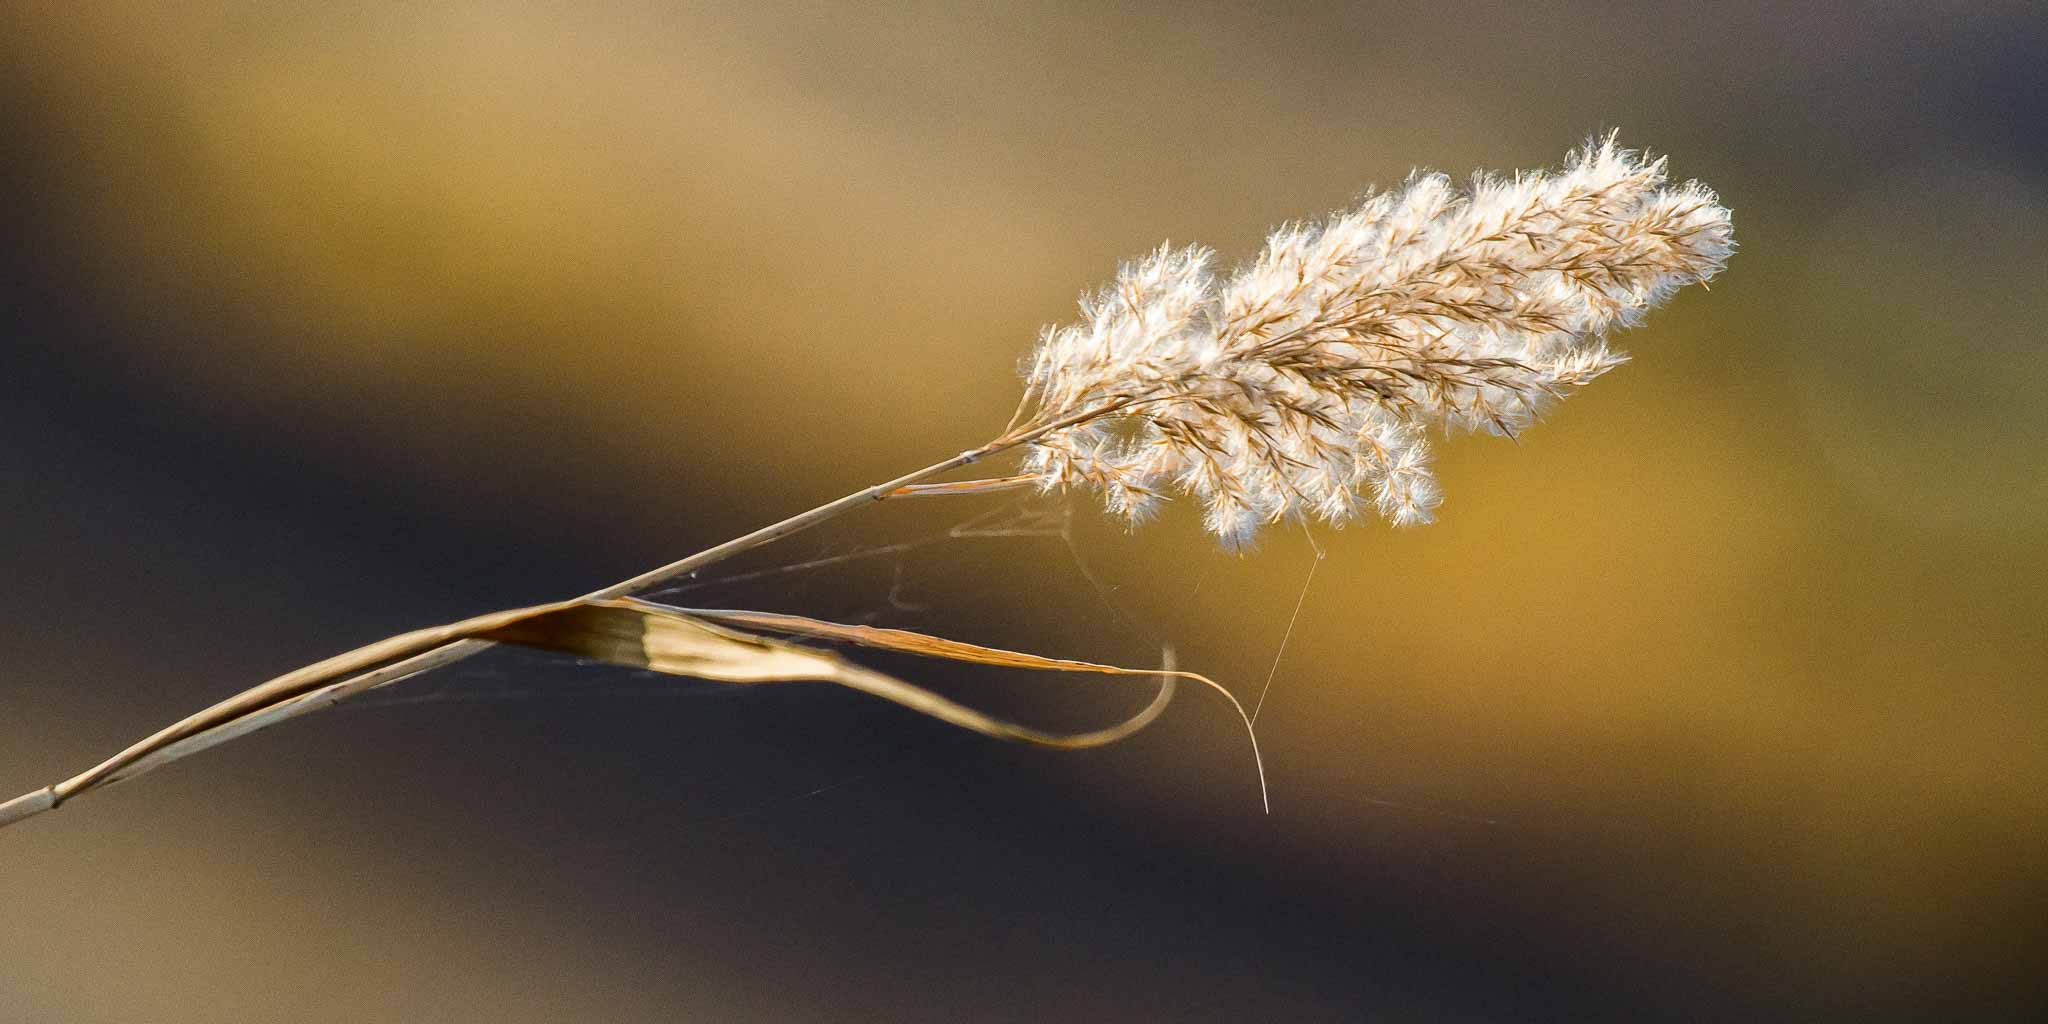 image of dried marsh grass seed head